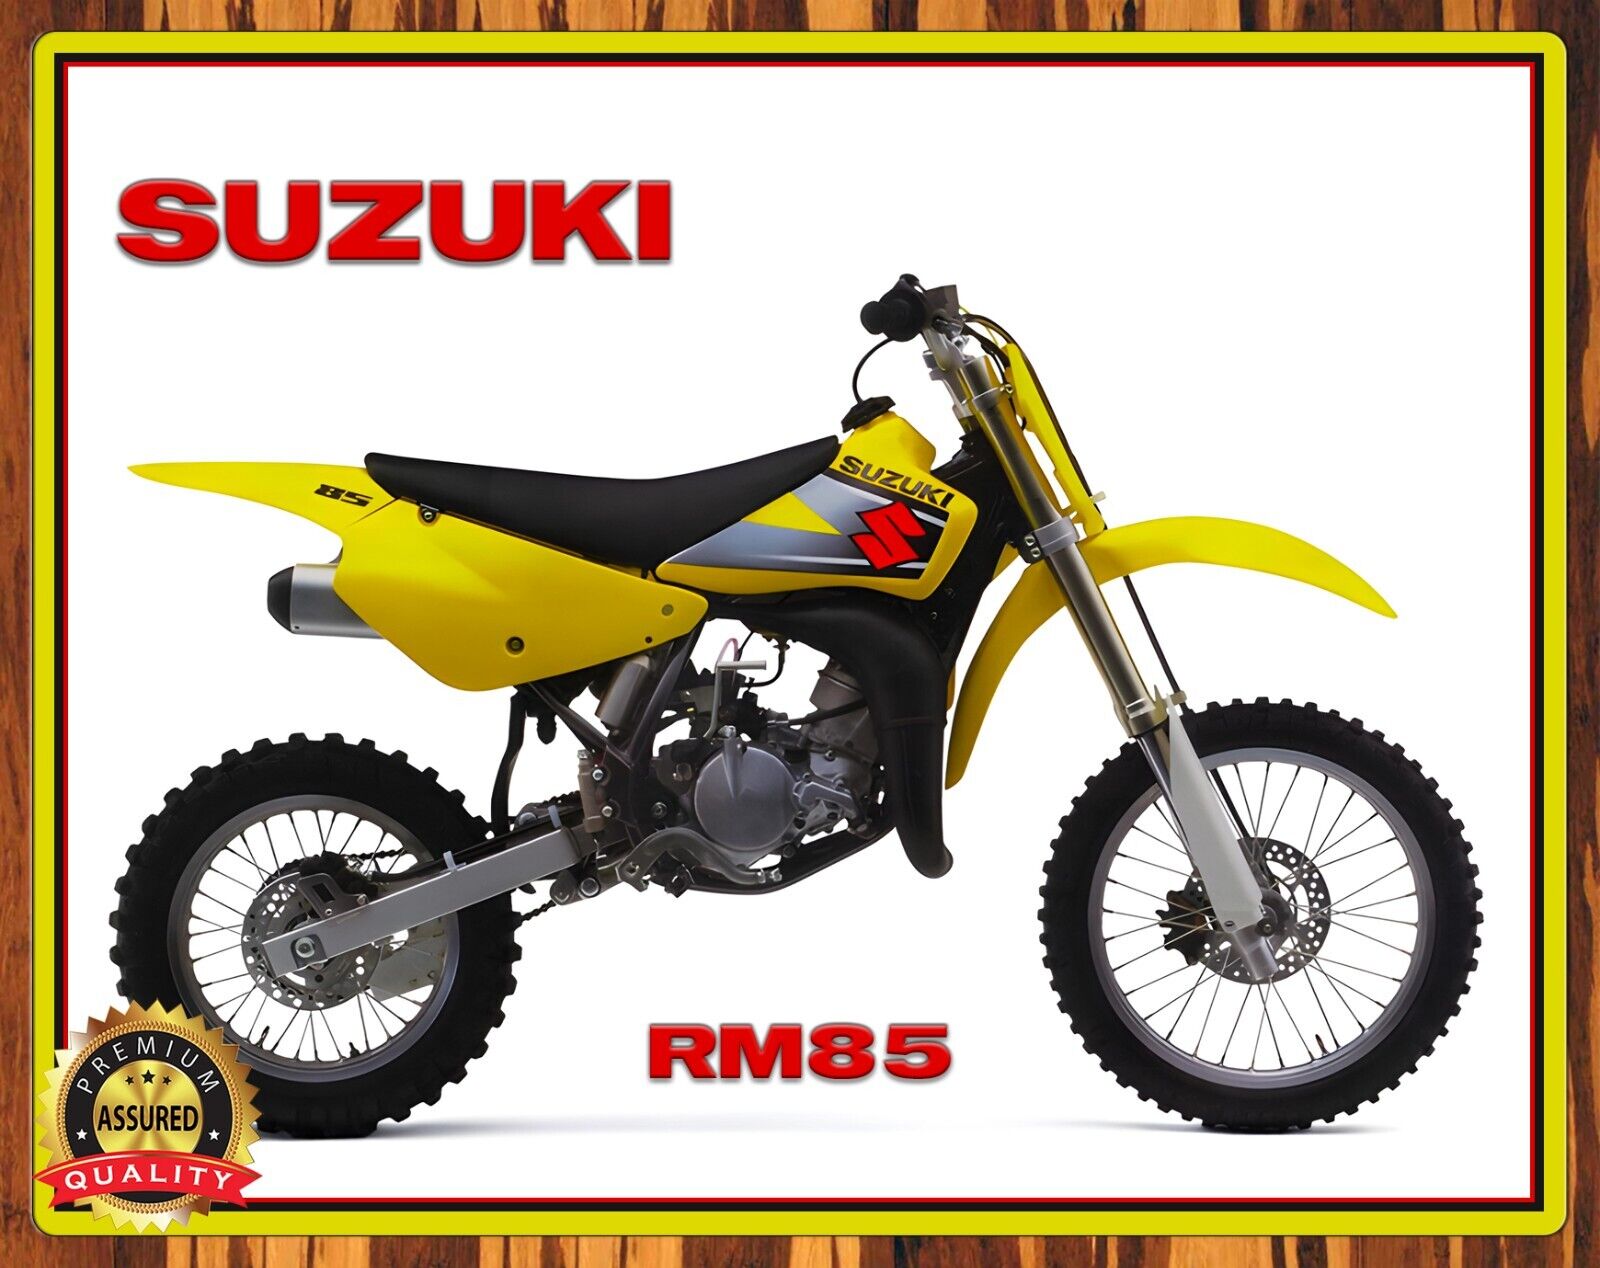 2002 Suzuki - RM85 - Motocross - Metal Sign 11 x 14